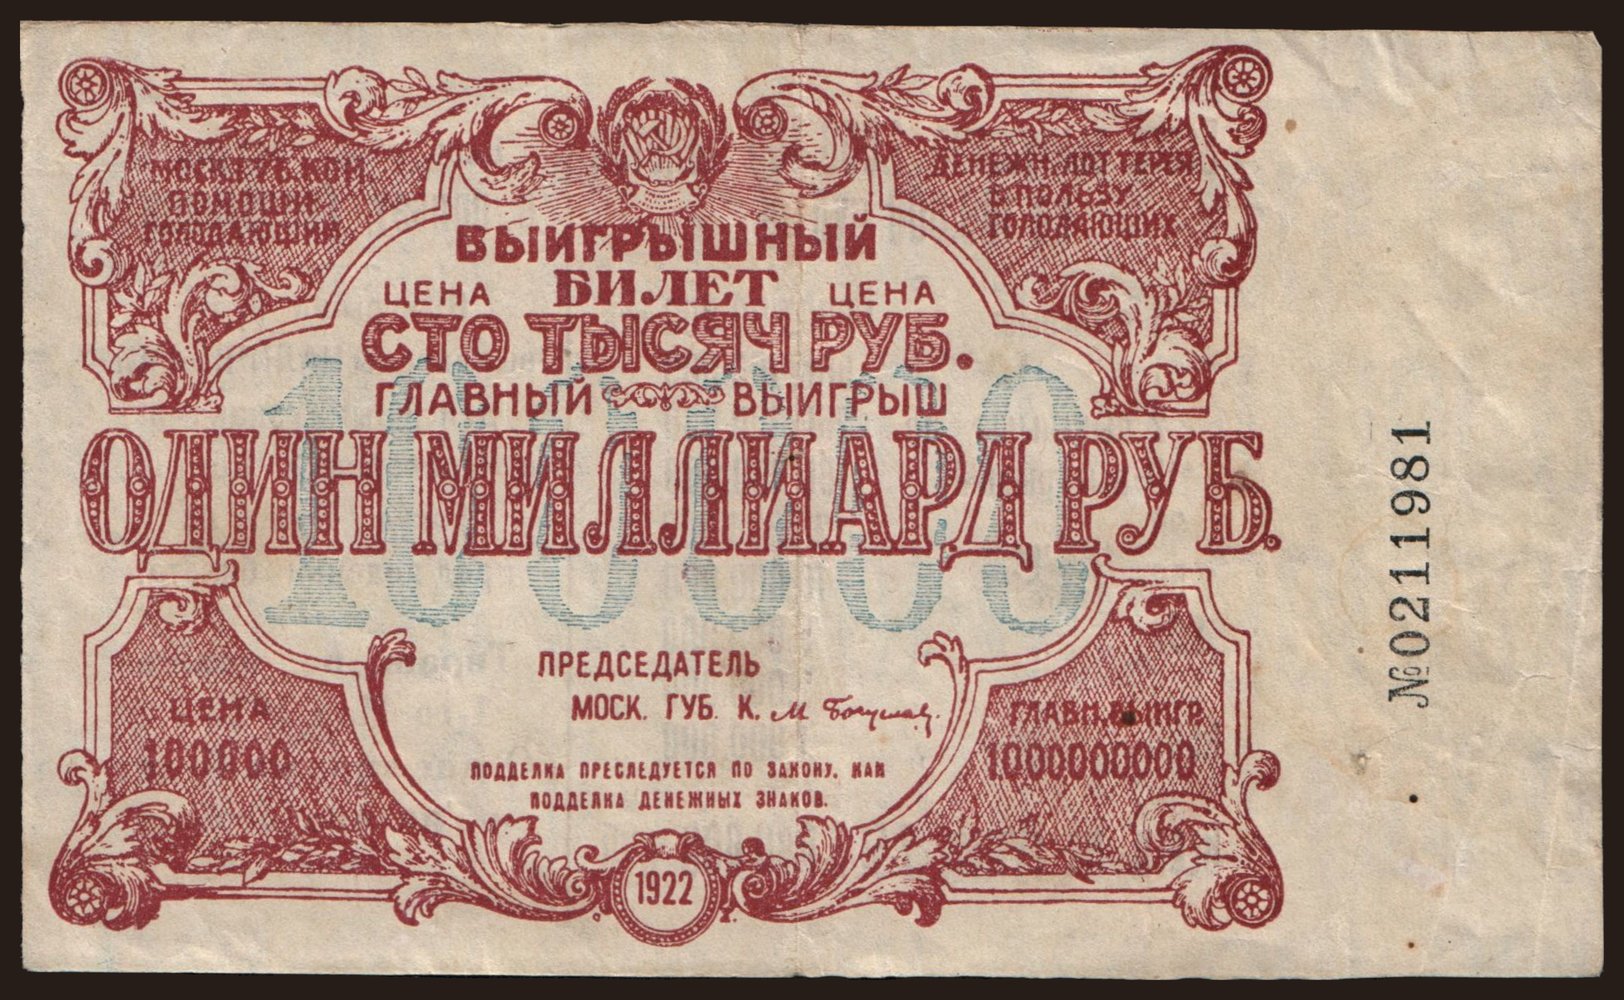 Vyigryshnij bilet, 100.000 rubel, 1922